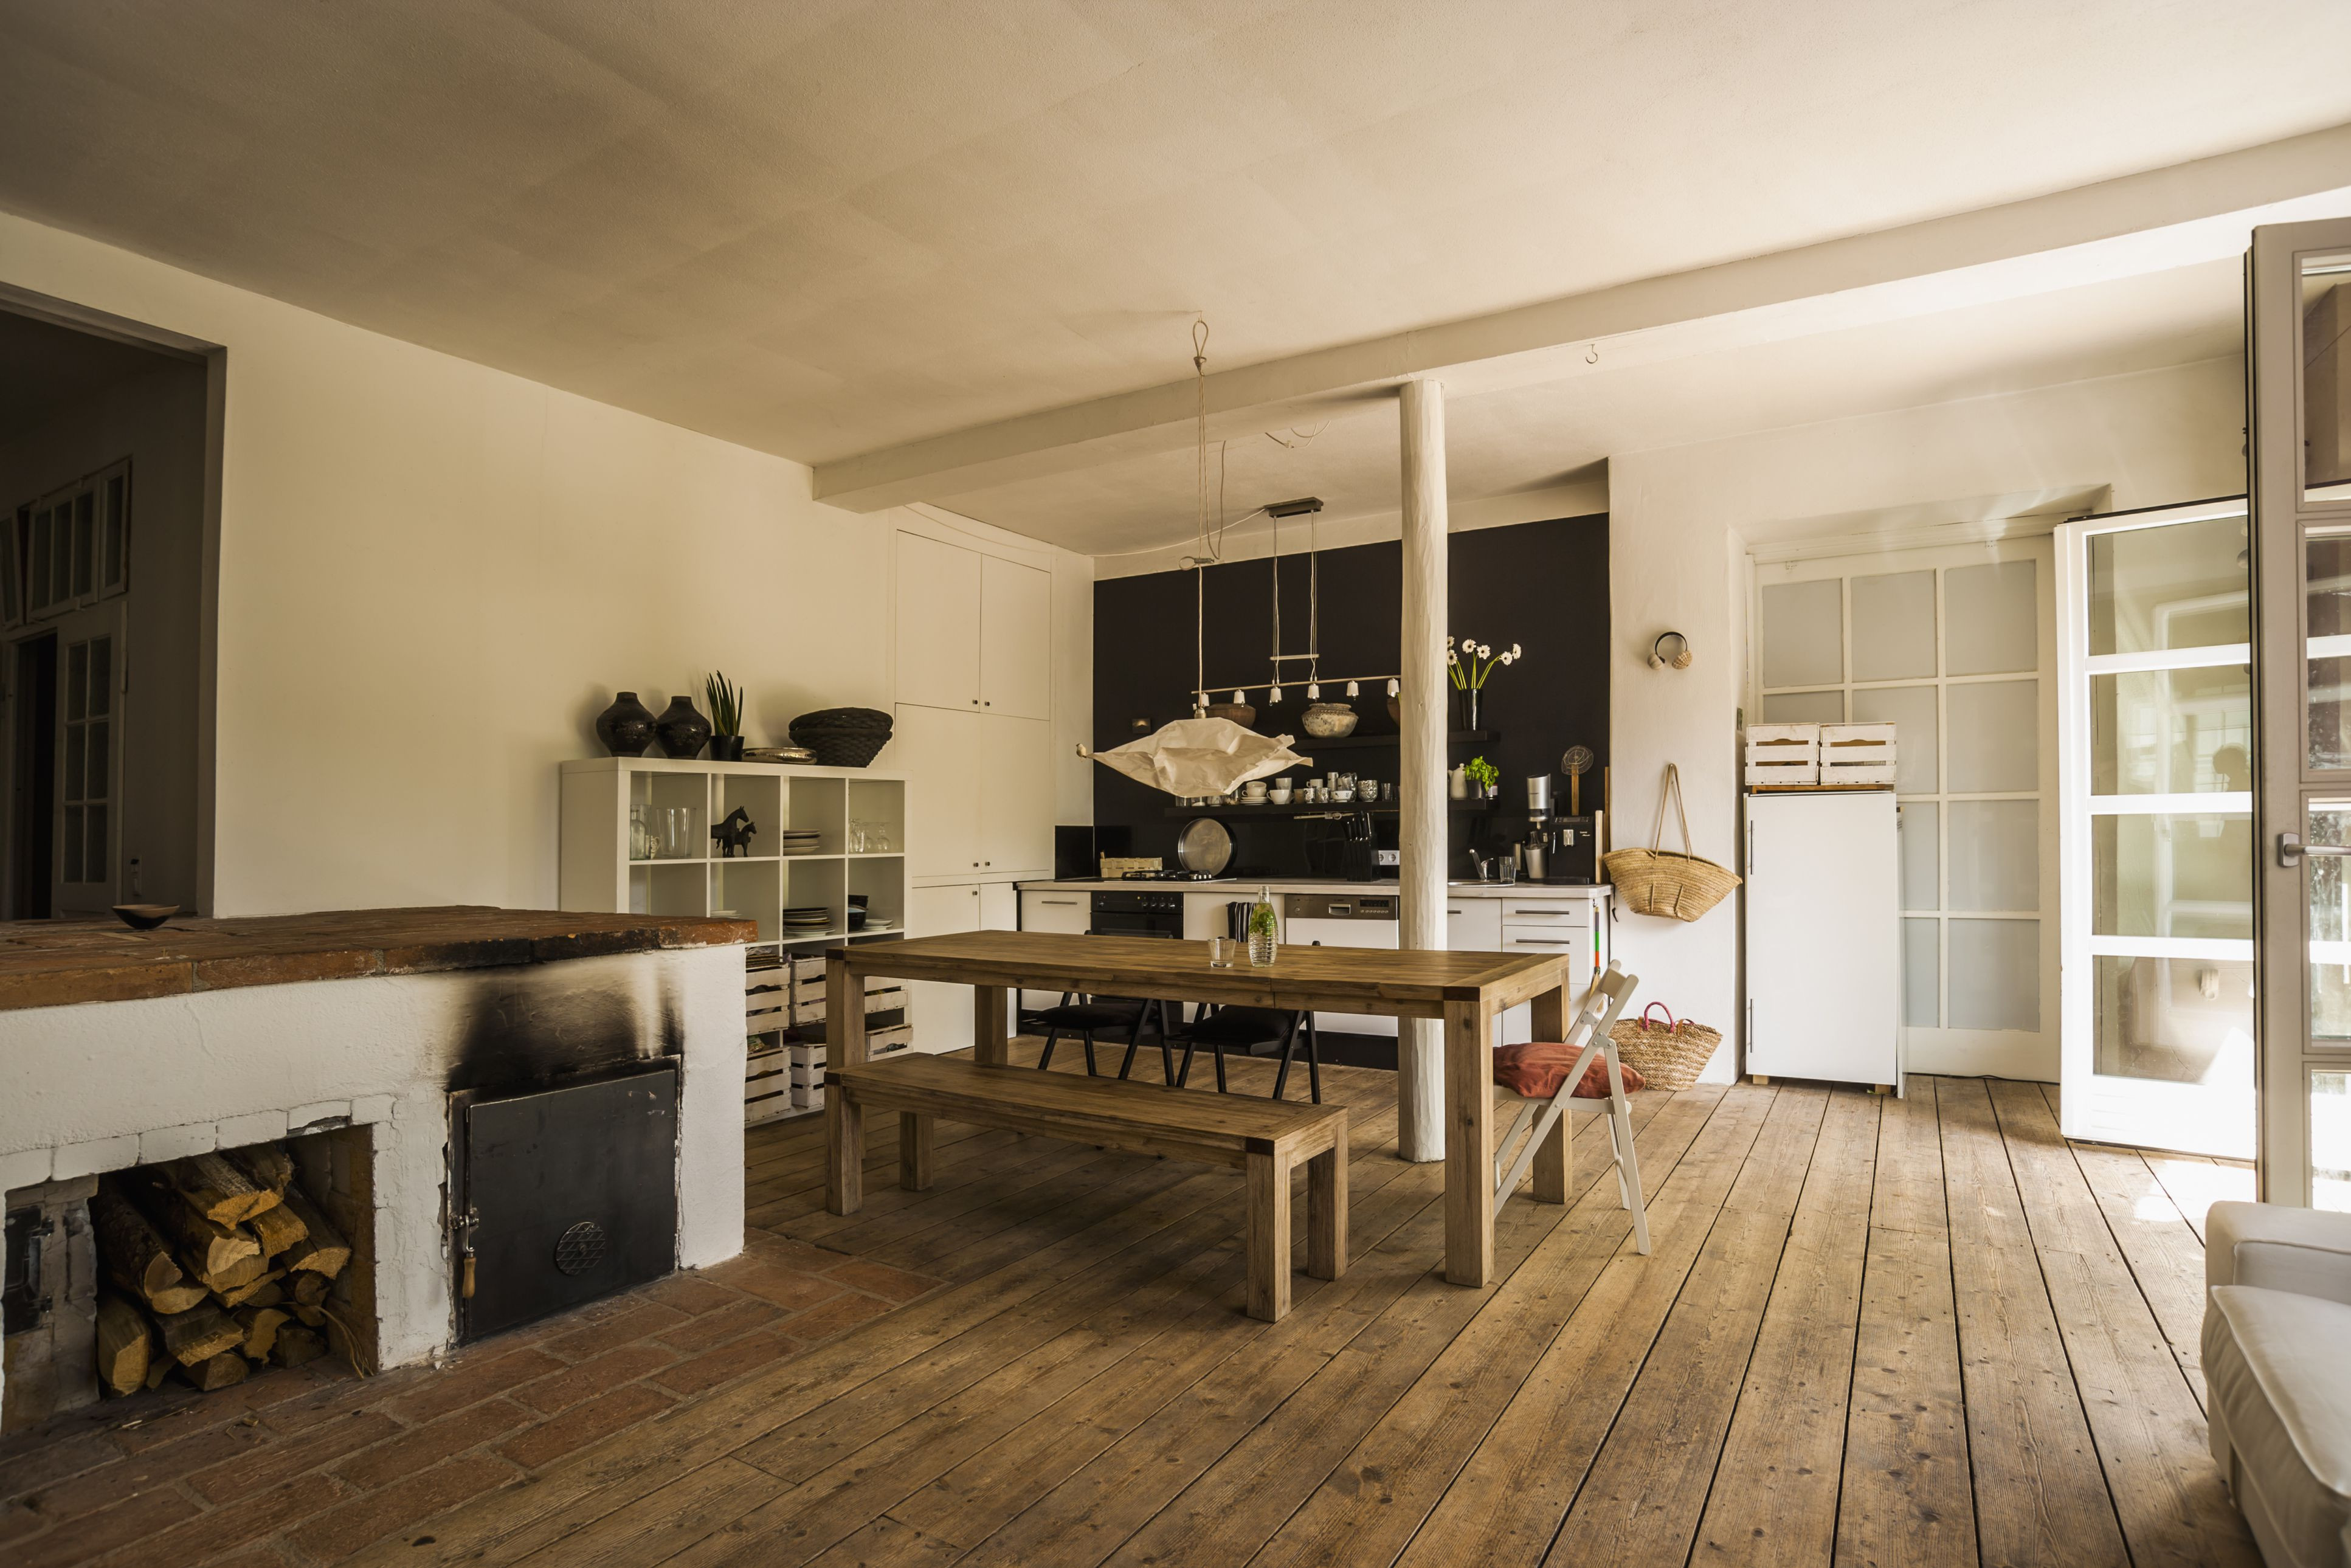 hardwood flooring long island of gorgeous kitchens with wooden flooring with kitchen with rustic plank wooden floor 544546775 westend61 56a4a1633df78cf772835363